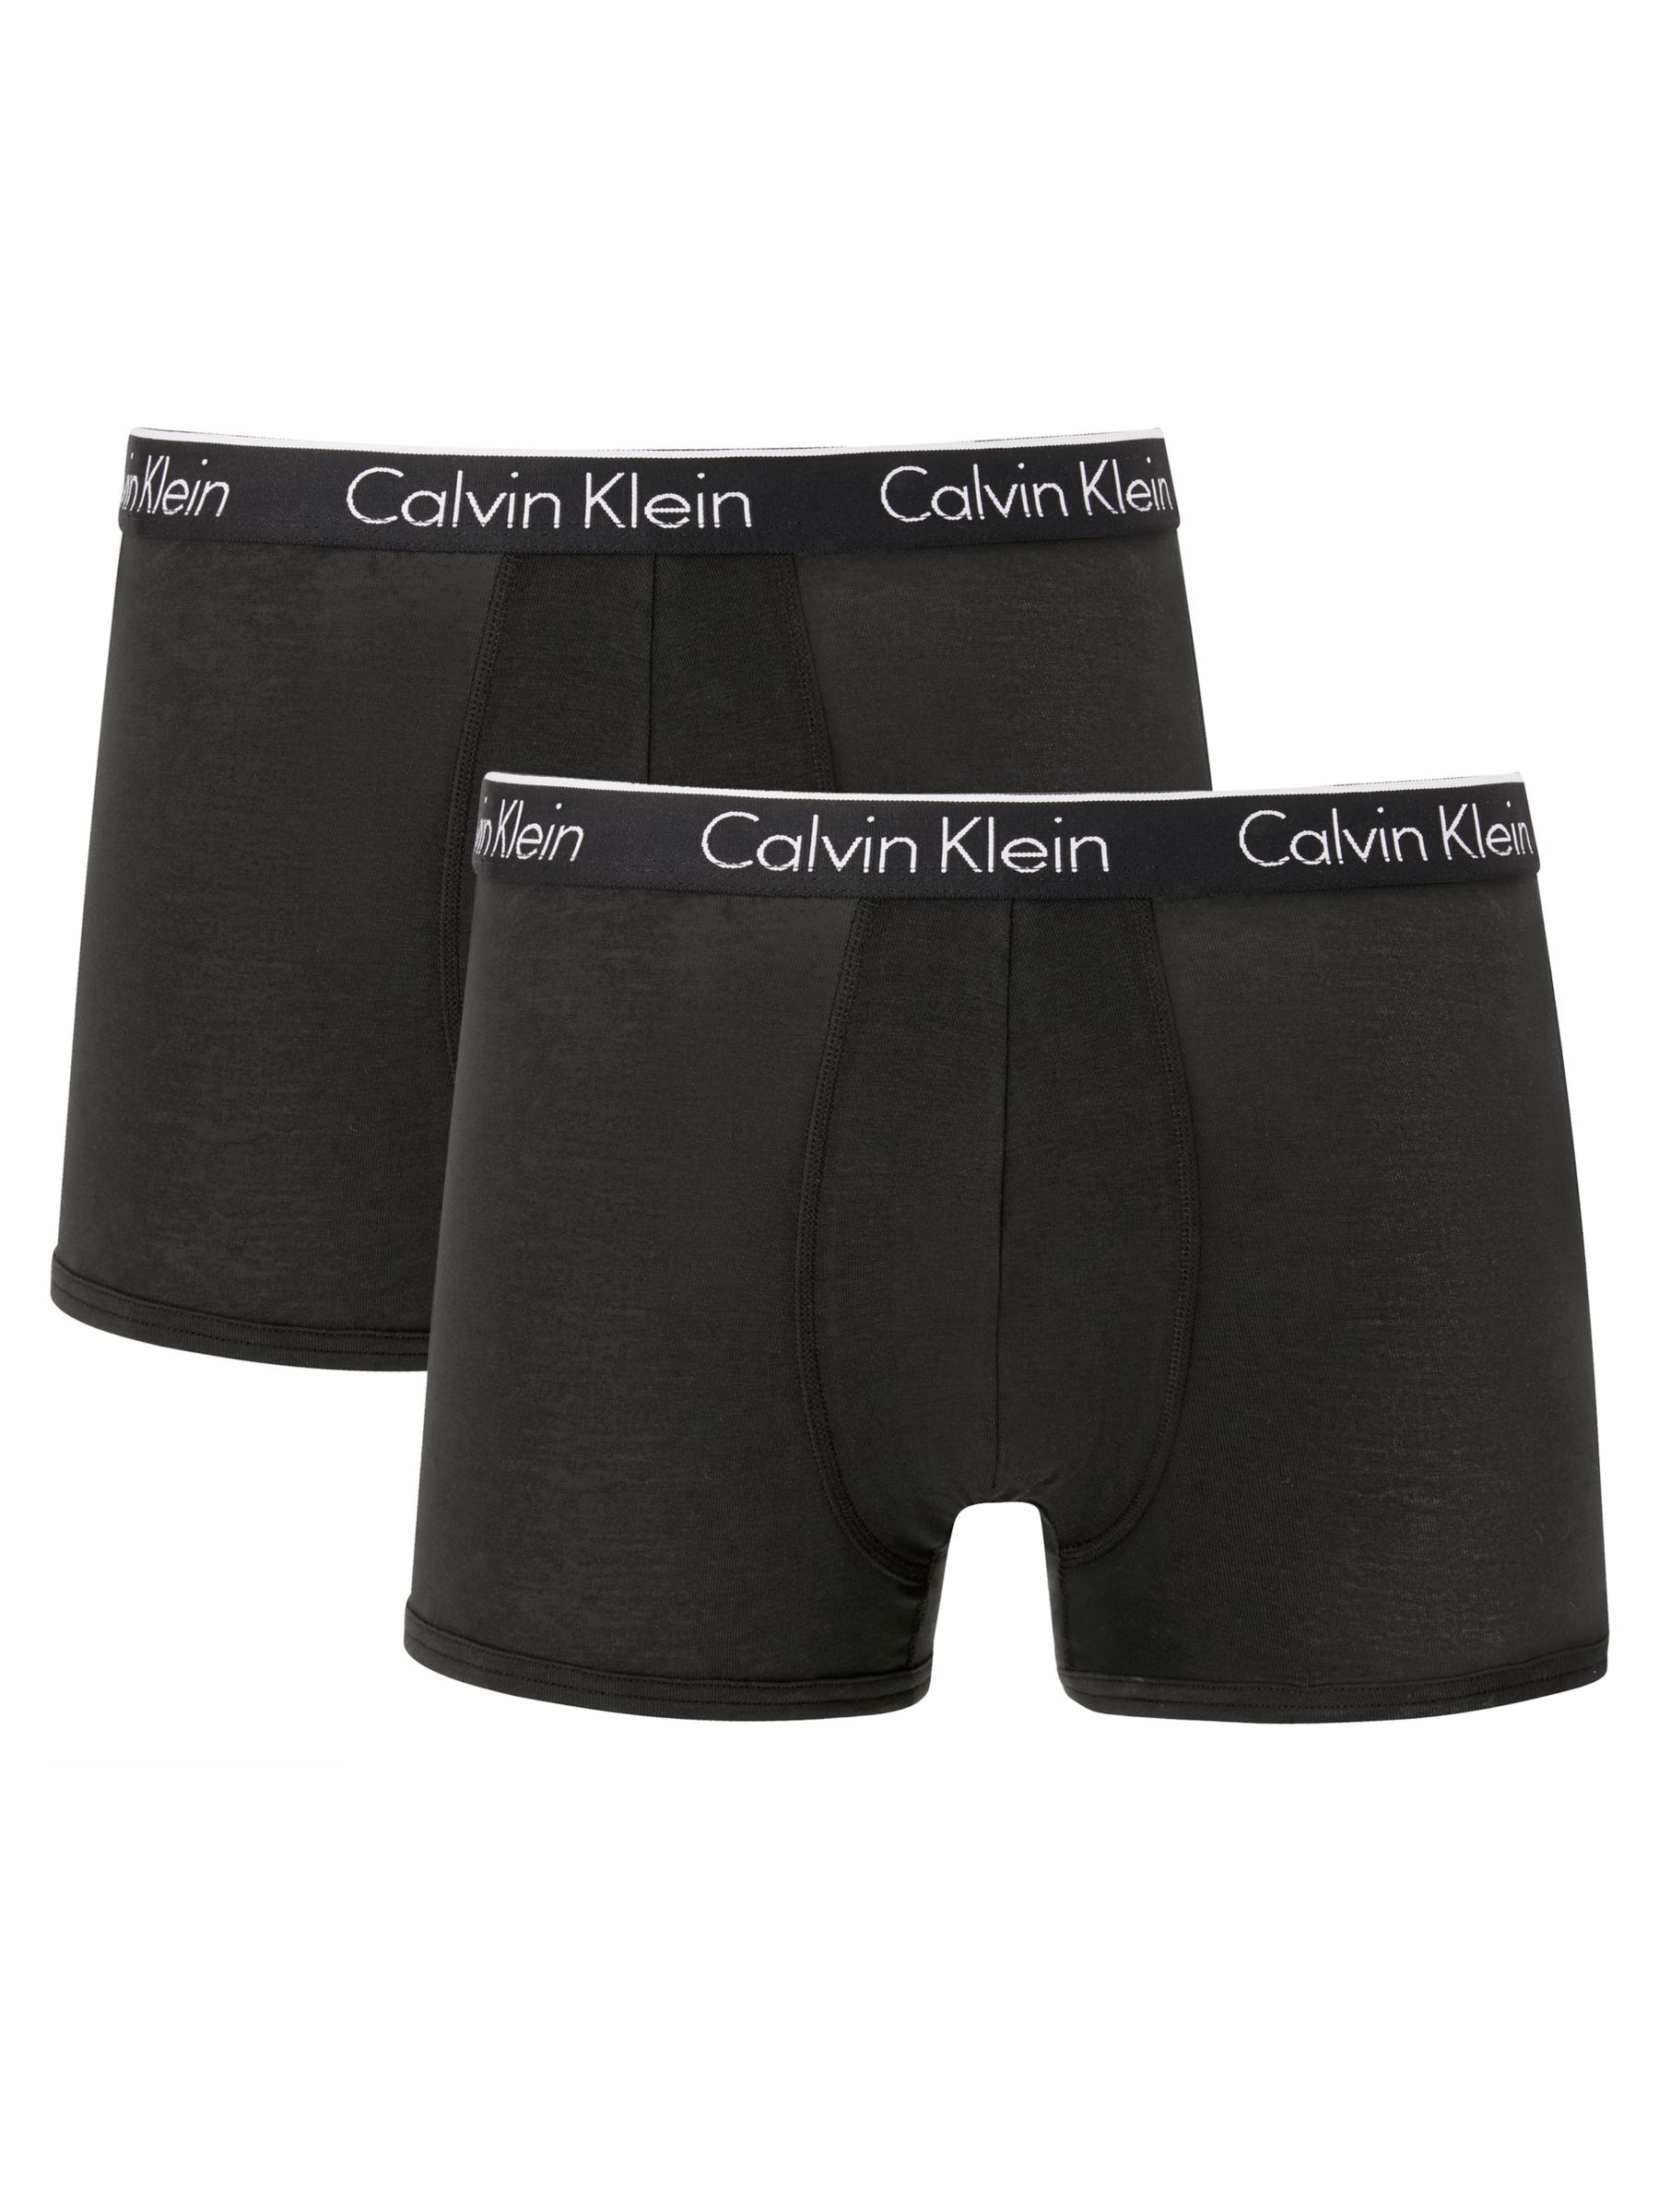 Calvin Klein Calvin Klein Trunks, Pack of 2